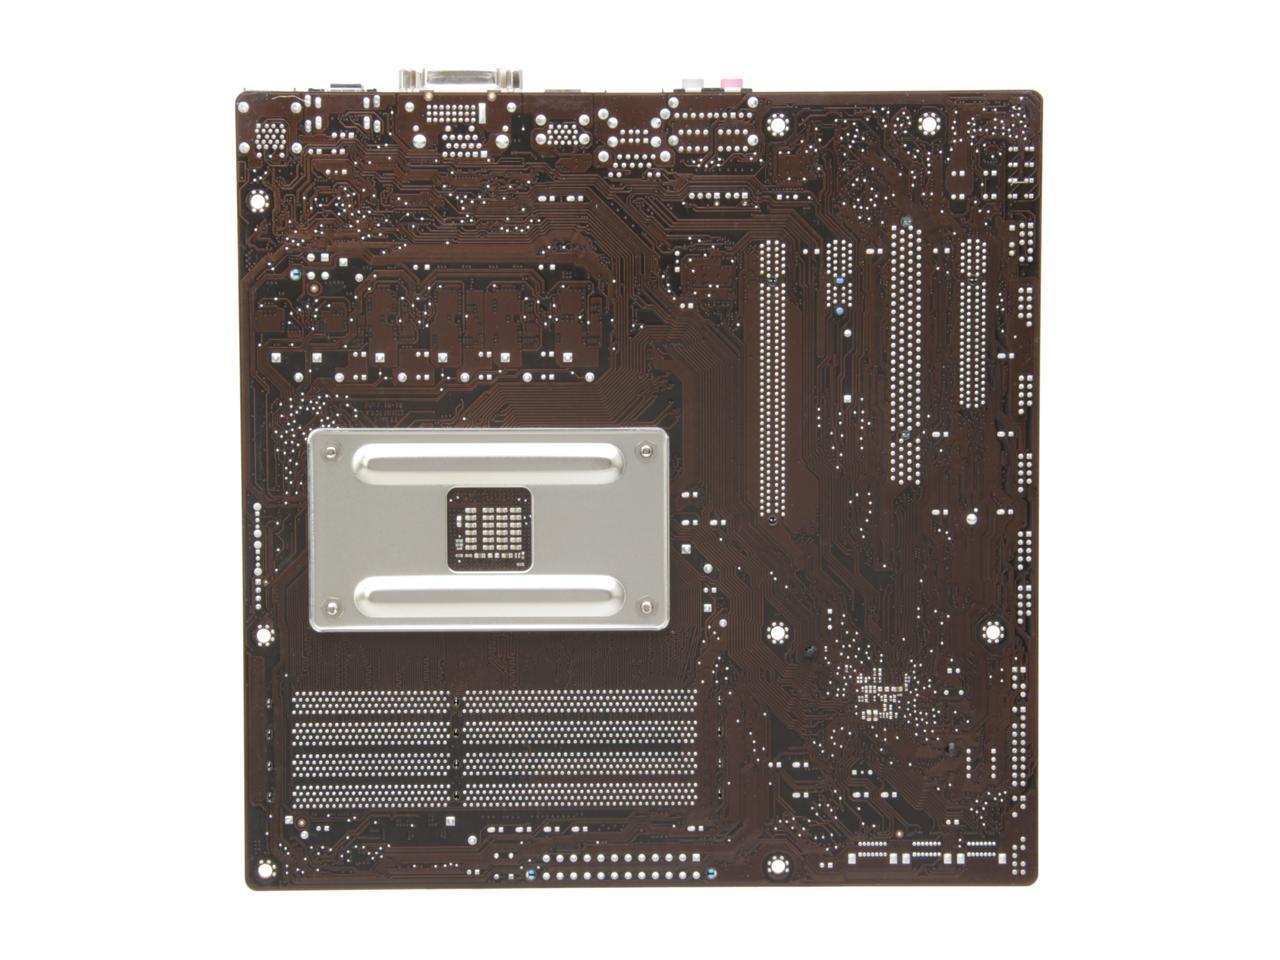 ASUS F1A55-M/CSM FM1 AMD A55 (Hudson D2) USB 3.0 HDMI Micro ATX AMD Motherboard with UEFI BIOS